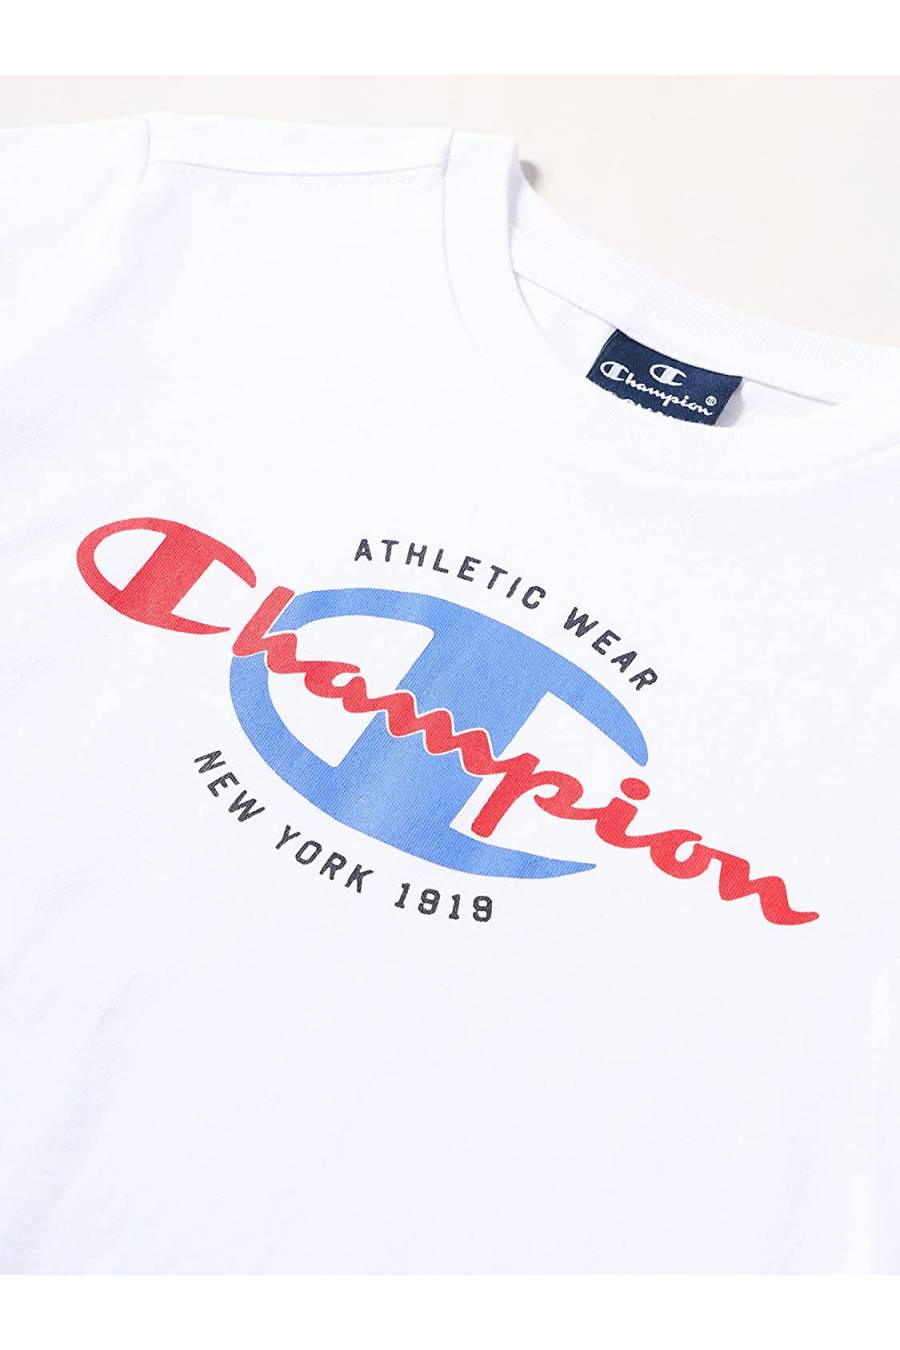 Camiseta Champion Crewneck 306307-WW001